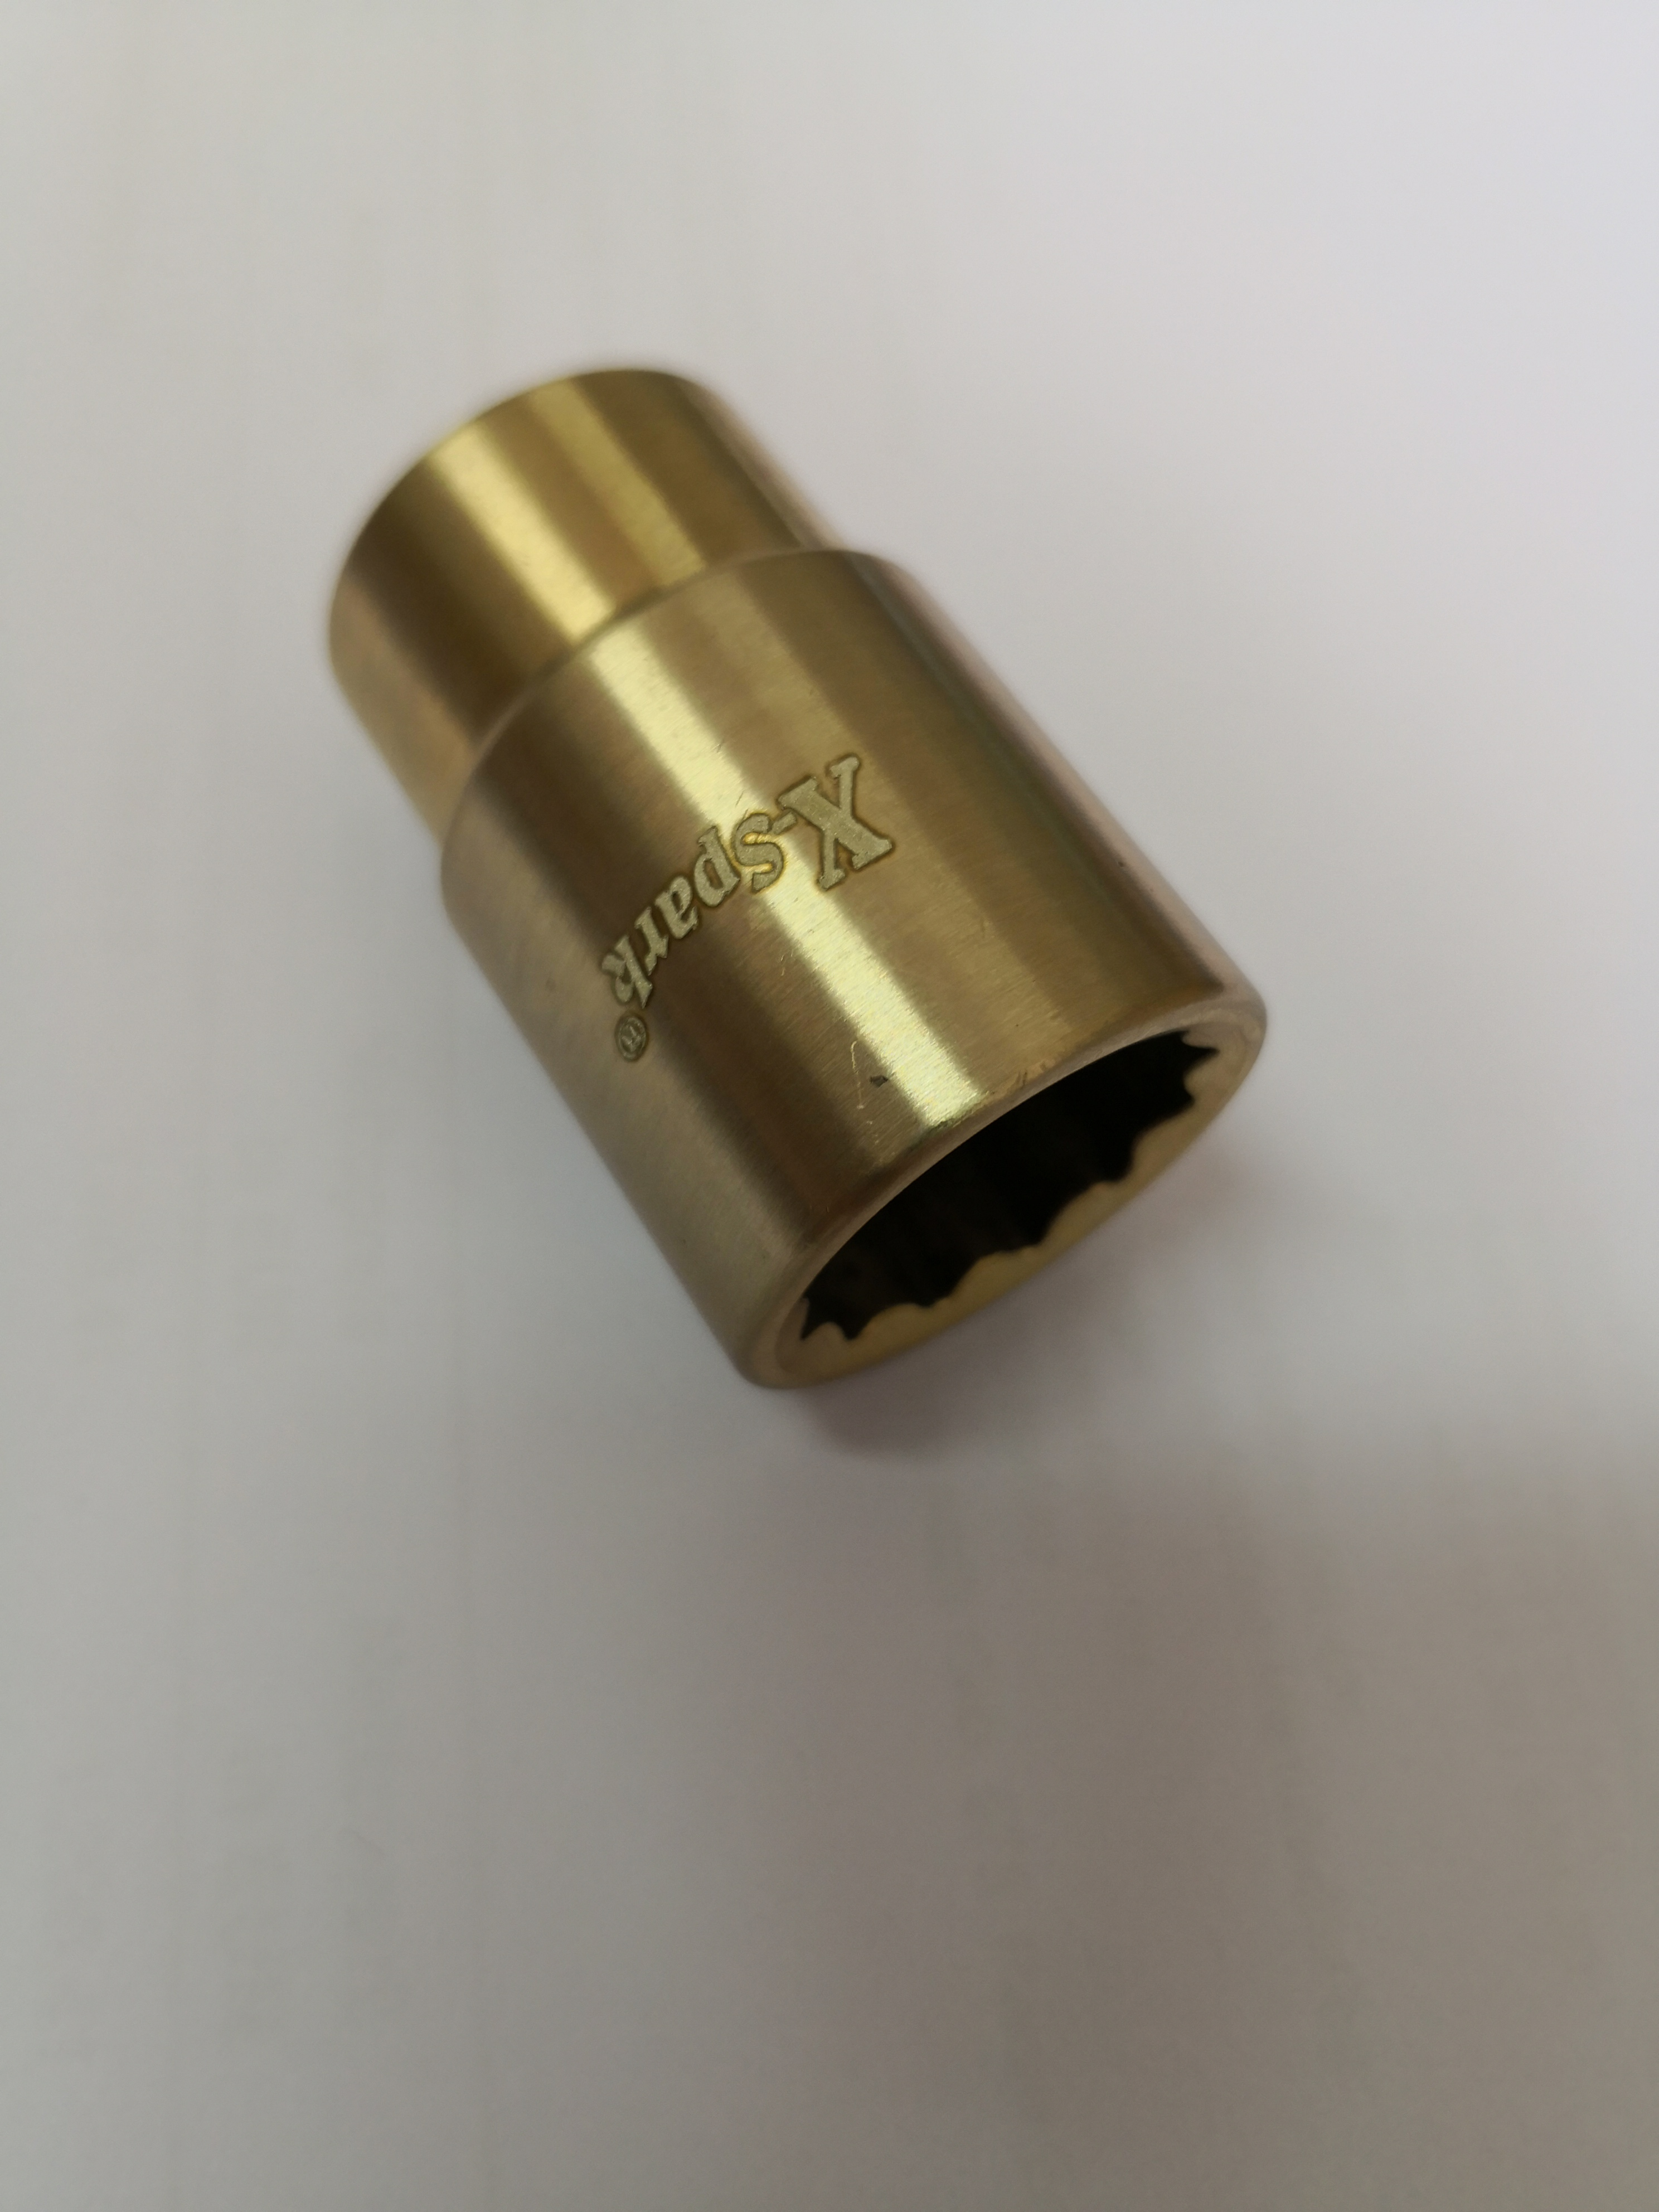 Socket 1/4 17 mm- non-sparking / low-sparking